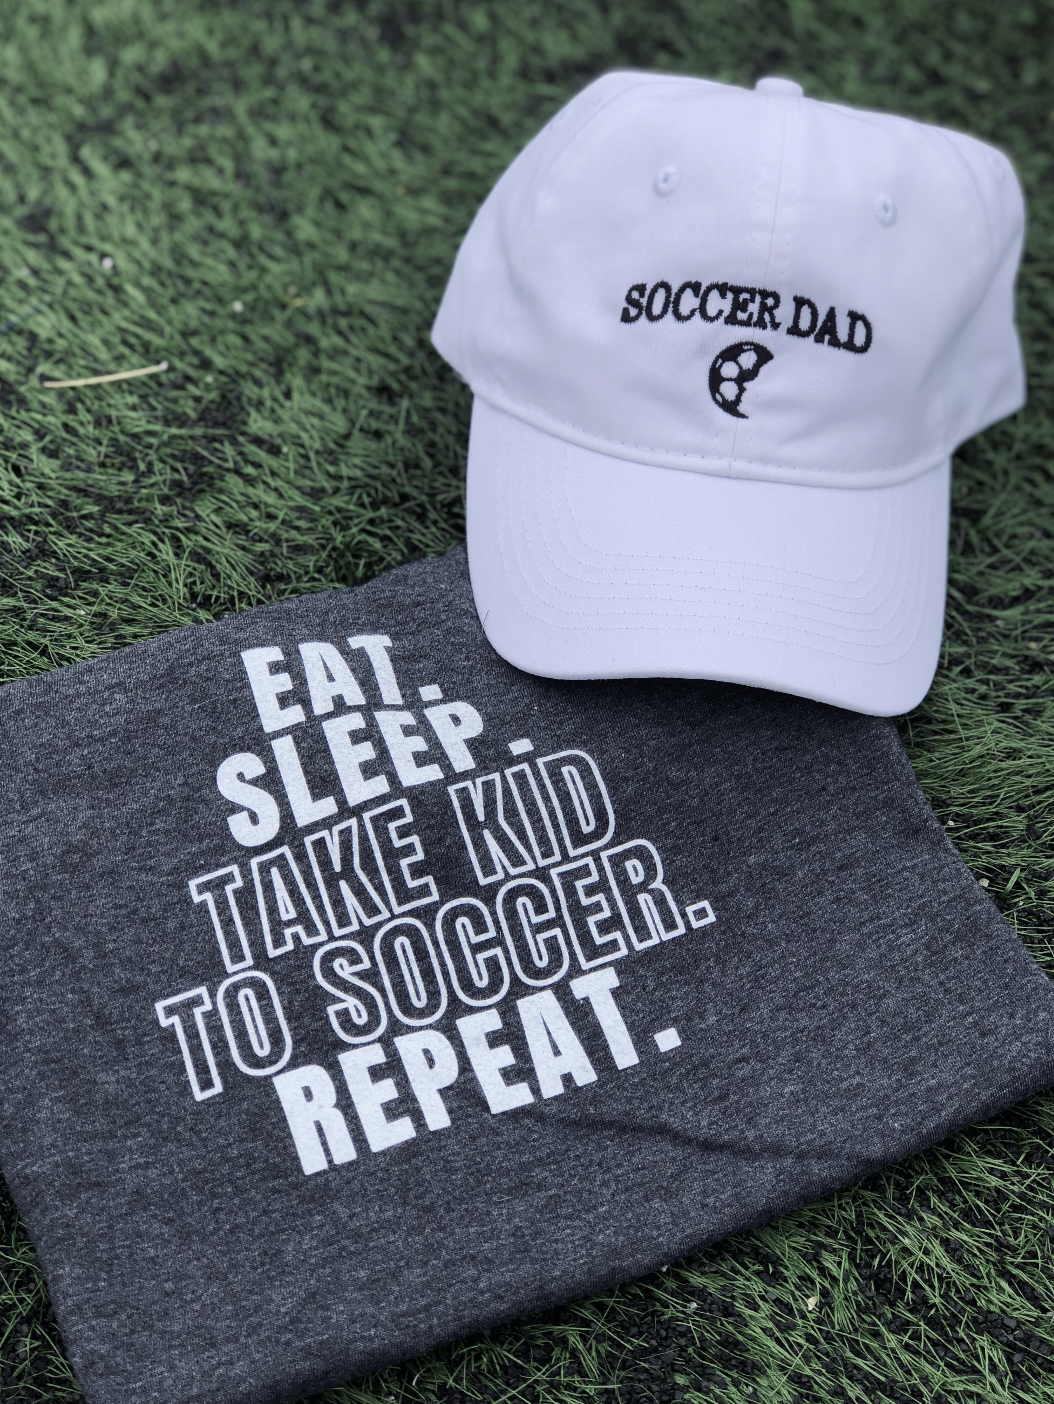 Eat, Sleep, Take Kid To Soccer, Repeat T-Shirt